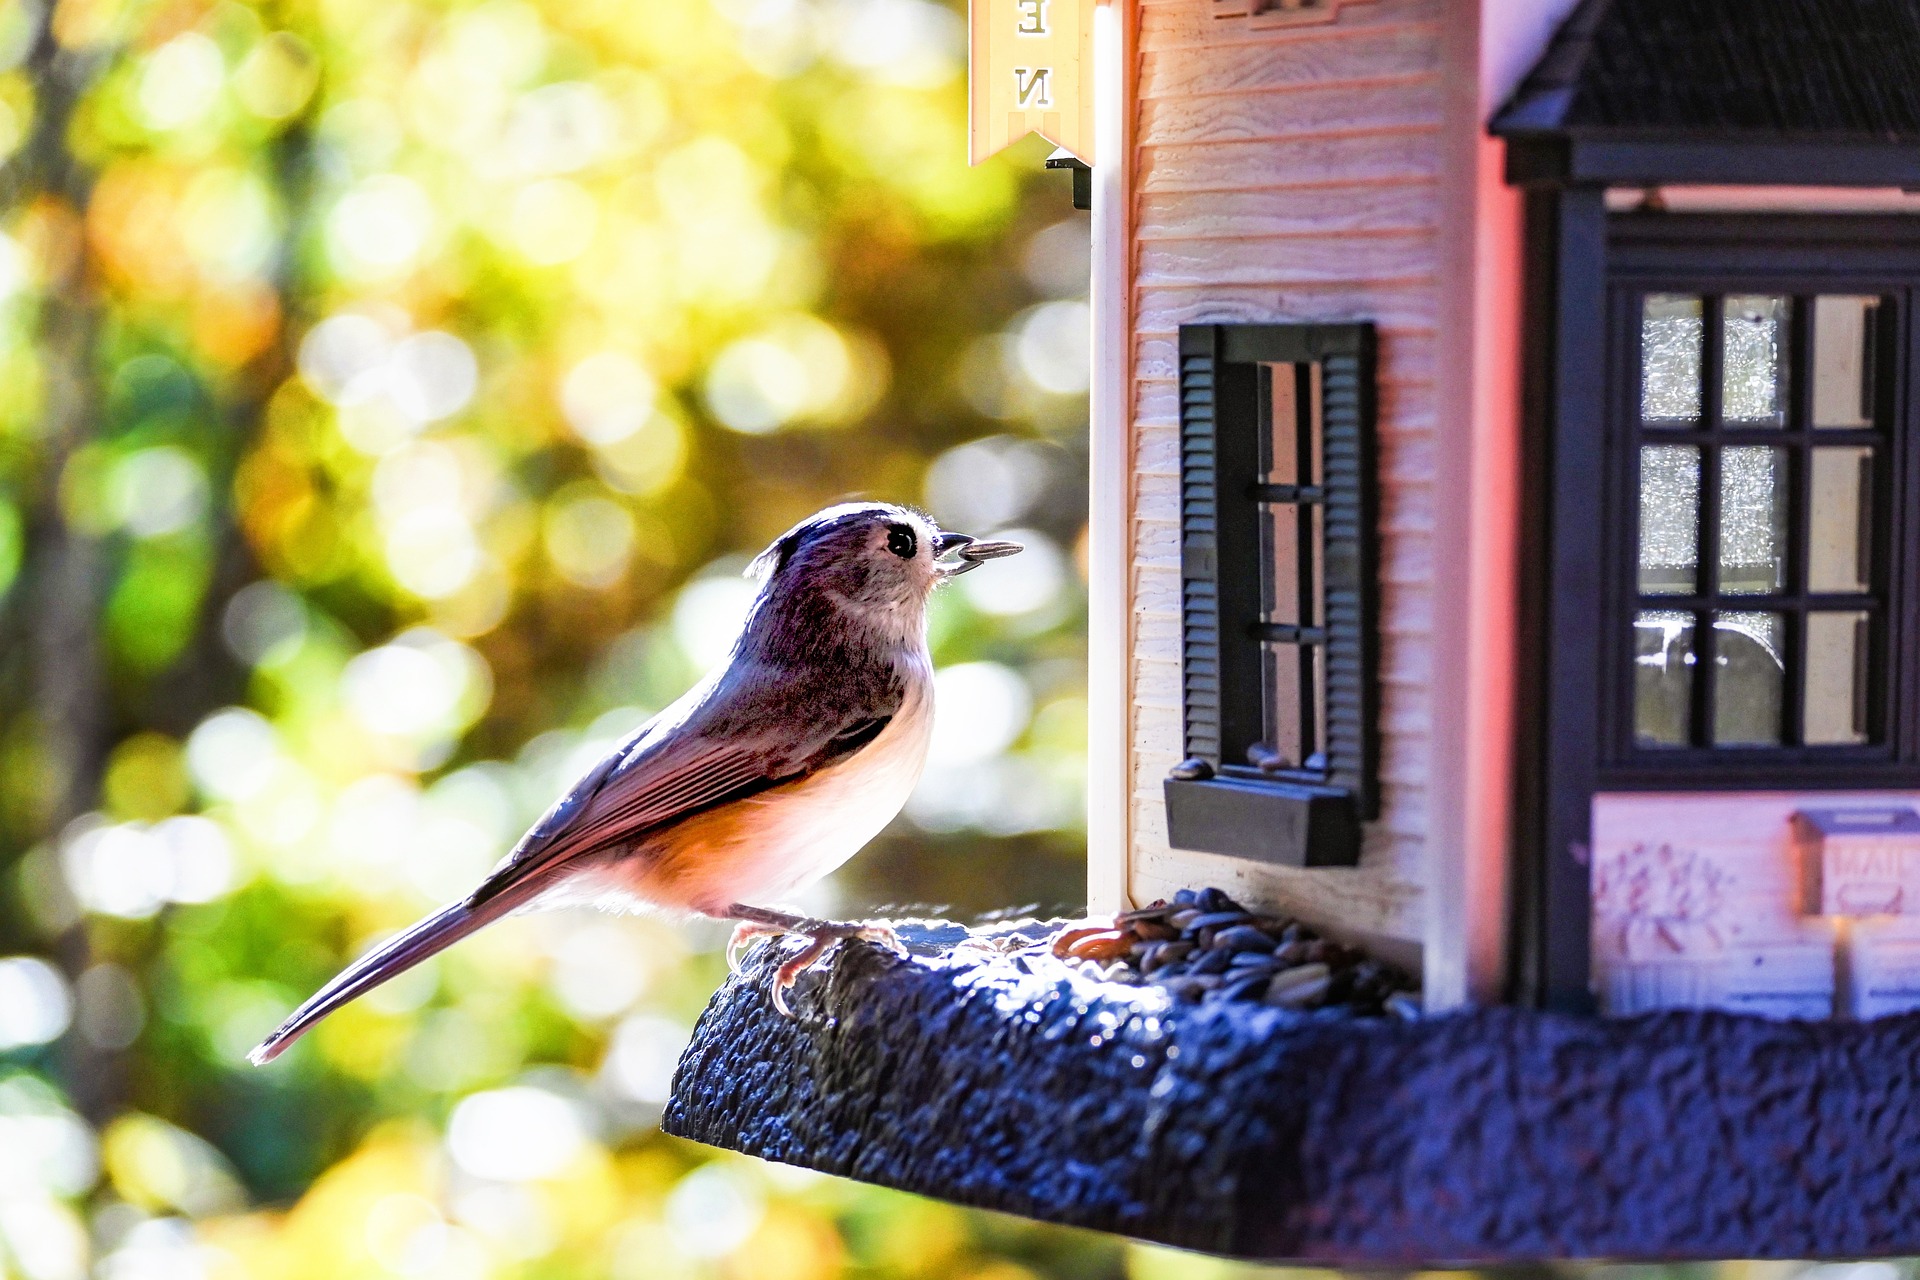 Sparrow perches on house-style bird feeder, seeds in beak.